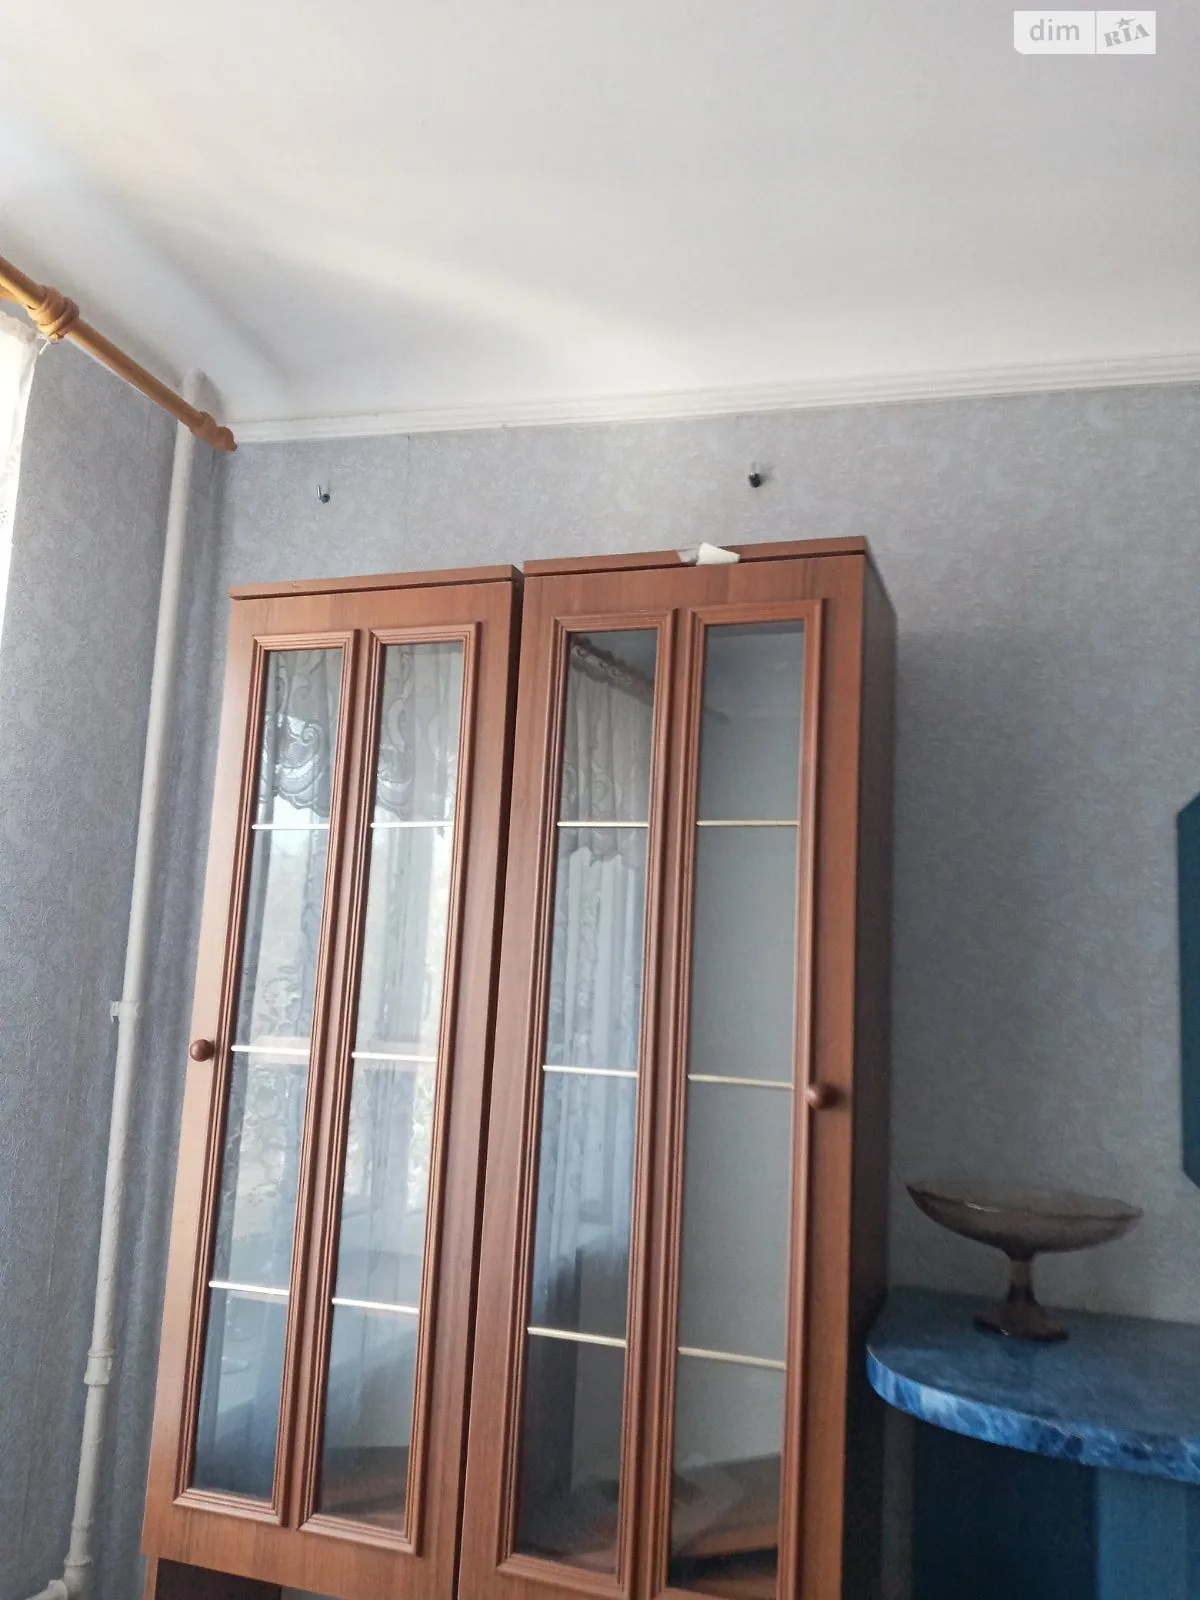 Продается комната 25.7 кв. м в Николаеве - фото 3